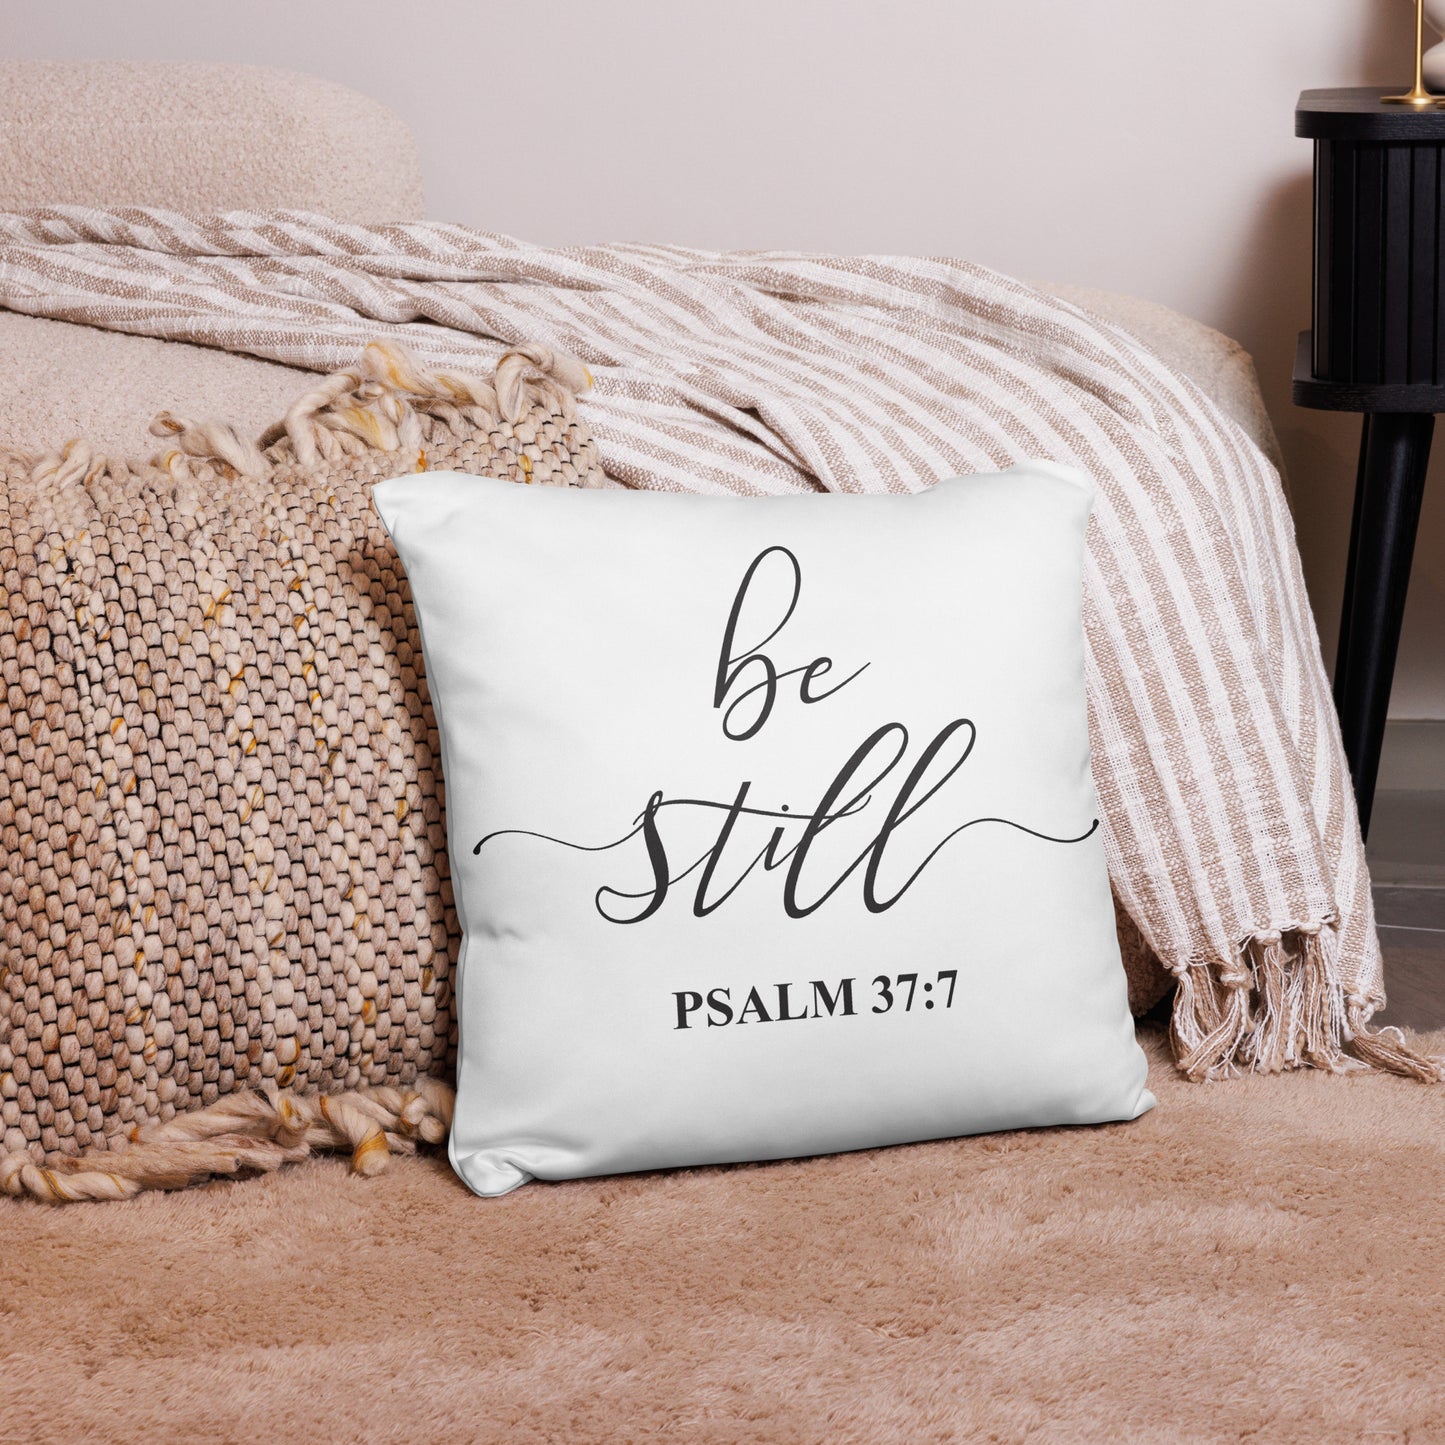 Be Still Psalm 37:7 Premium Decor Throw Pillow